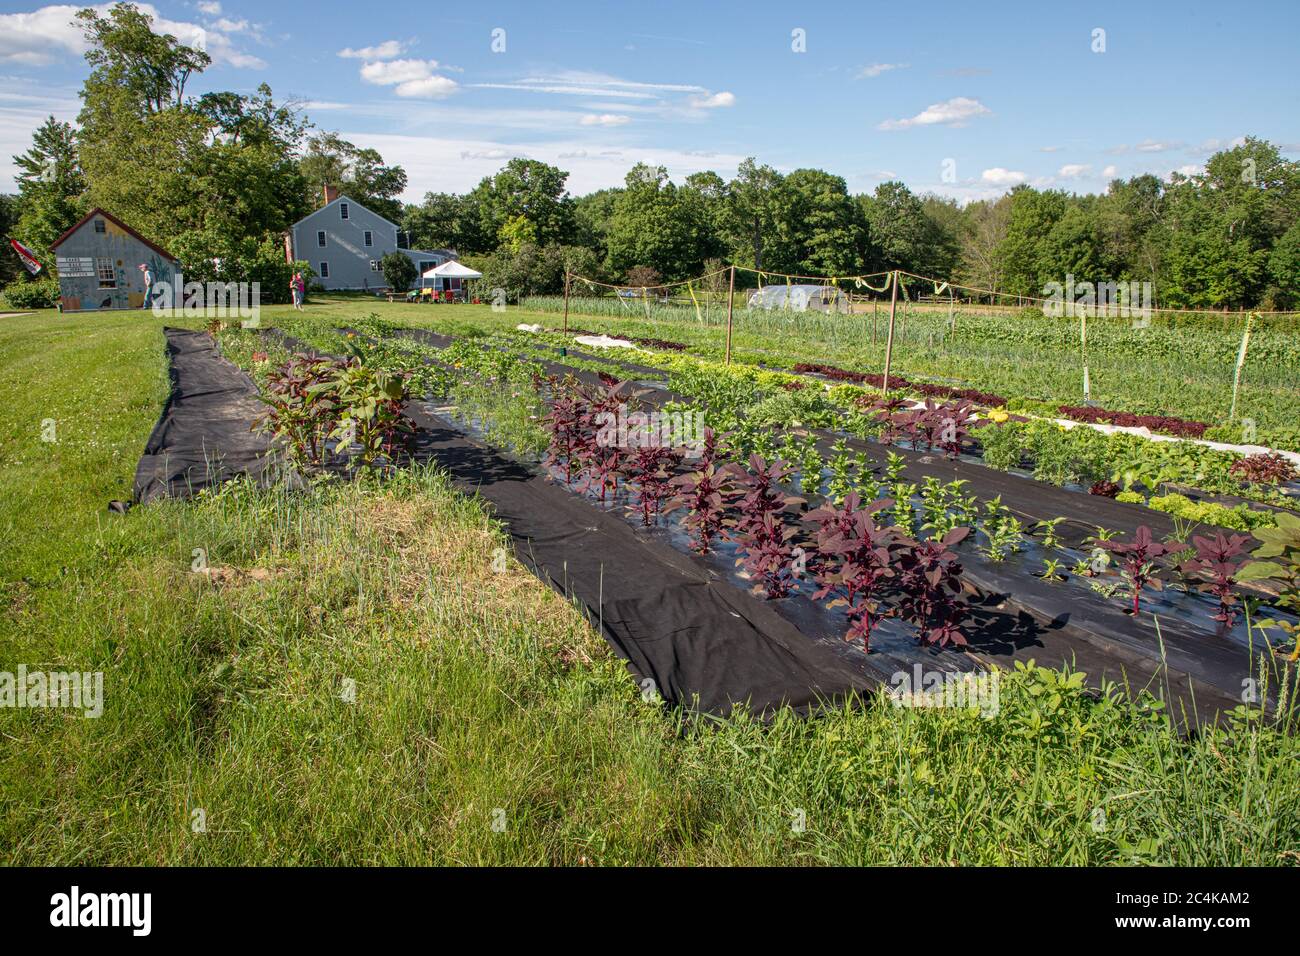 A large commercial market garden at a Massachusetts farm Stock Photo